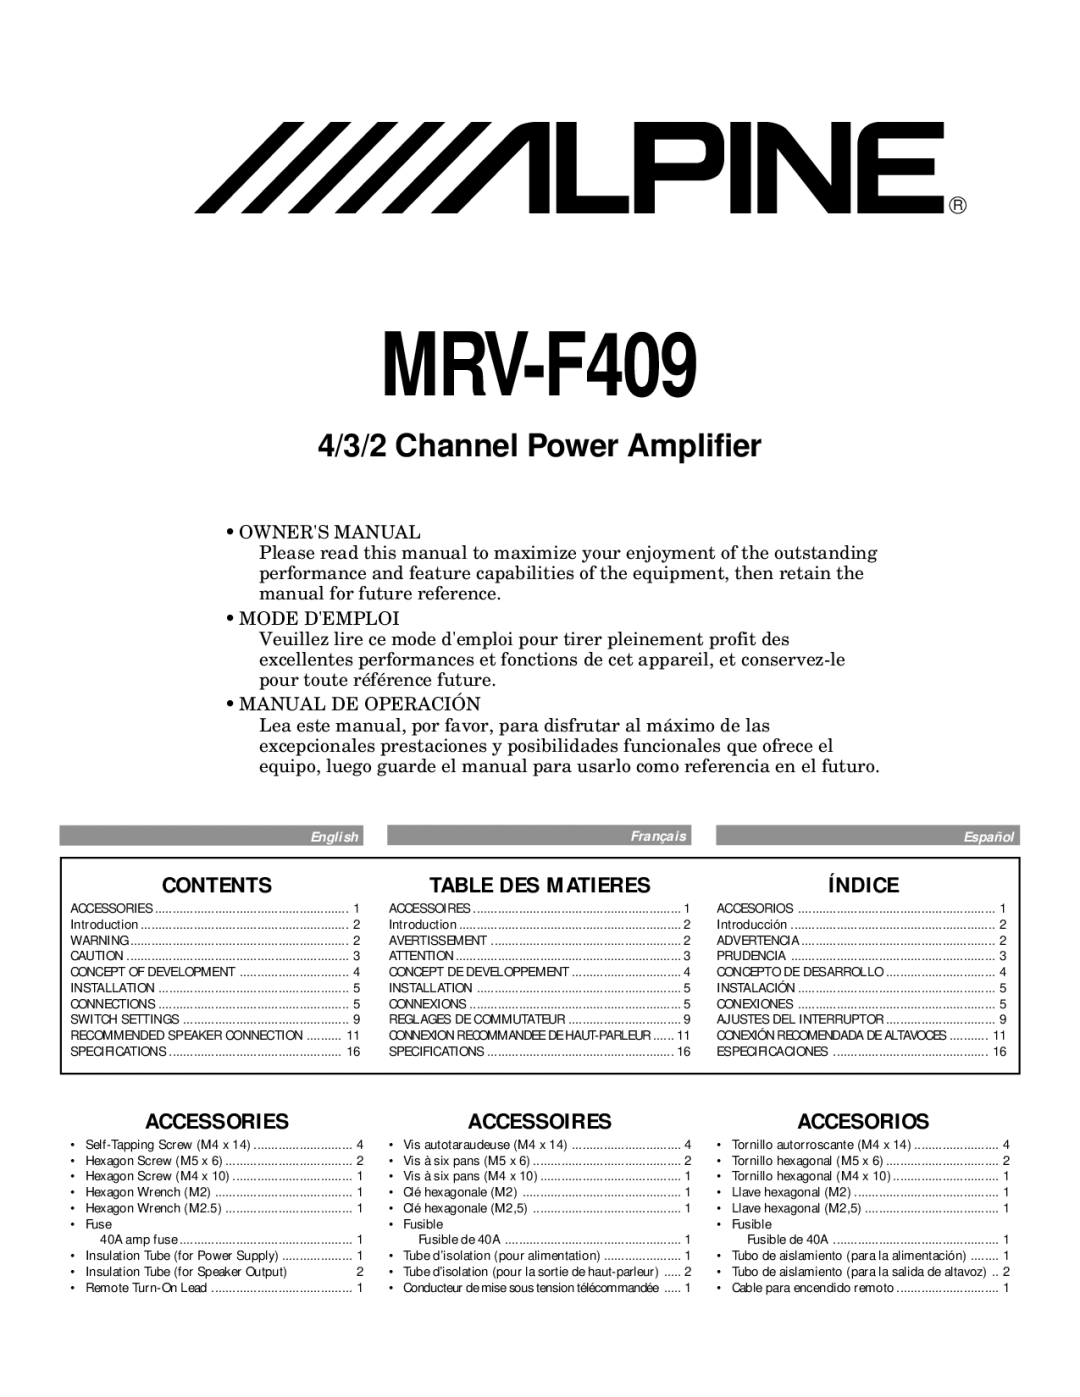 Alpine MRV-F409 owner manual Contents, Índice, Accessories Accessoires Accesorios, Fuse Fusible 